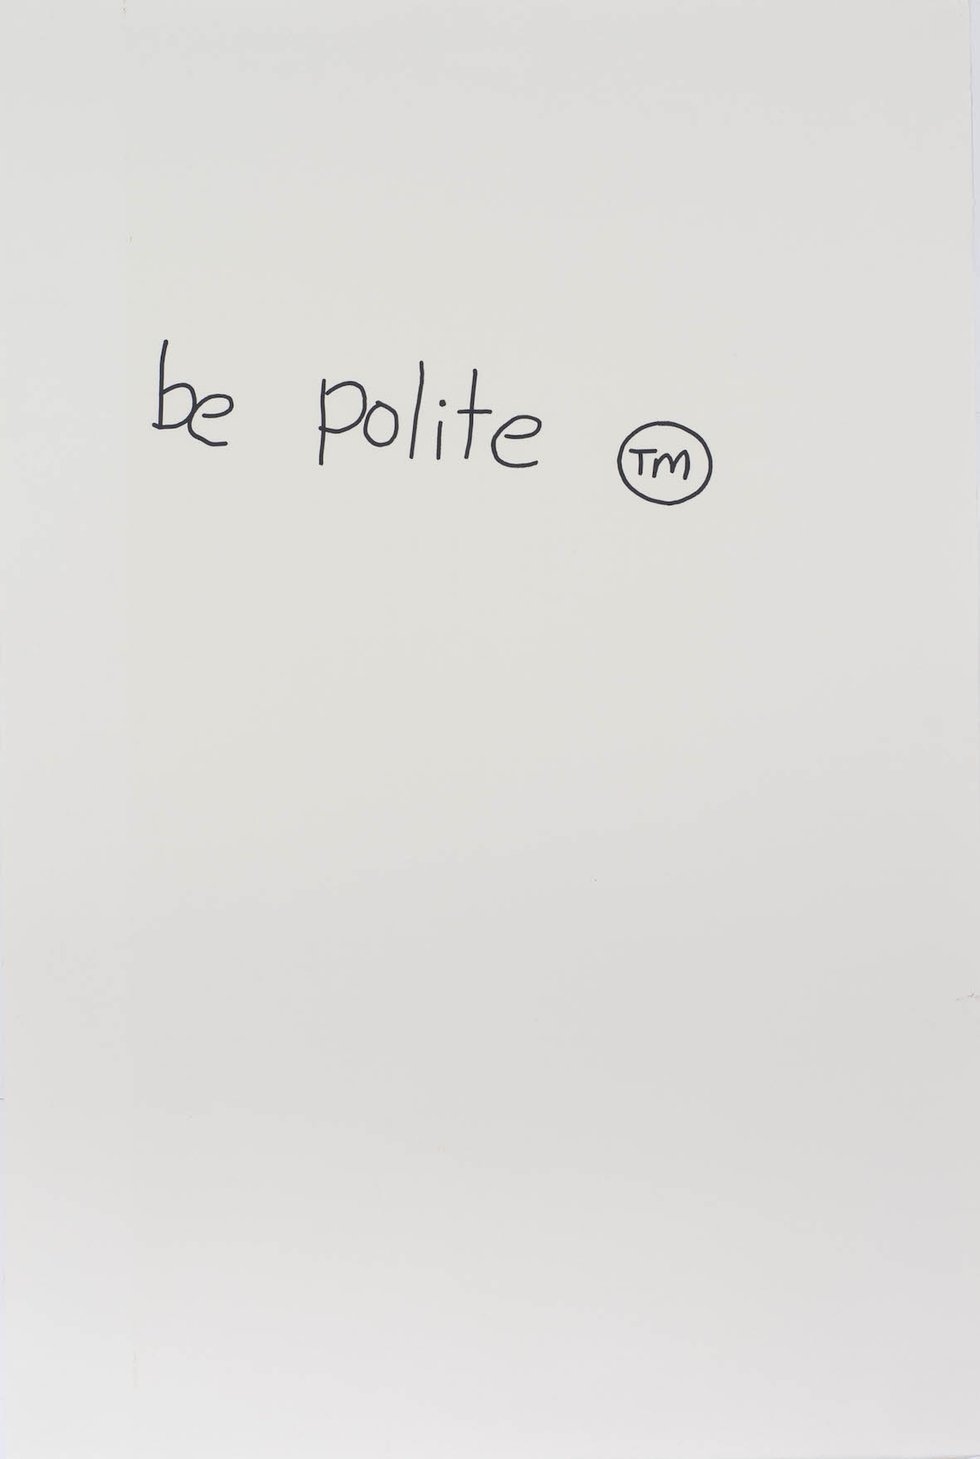 Gordon Bennett, "Notes to Basquiat: Be Polite," 1998